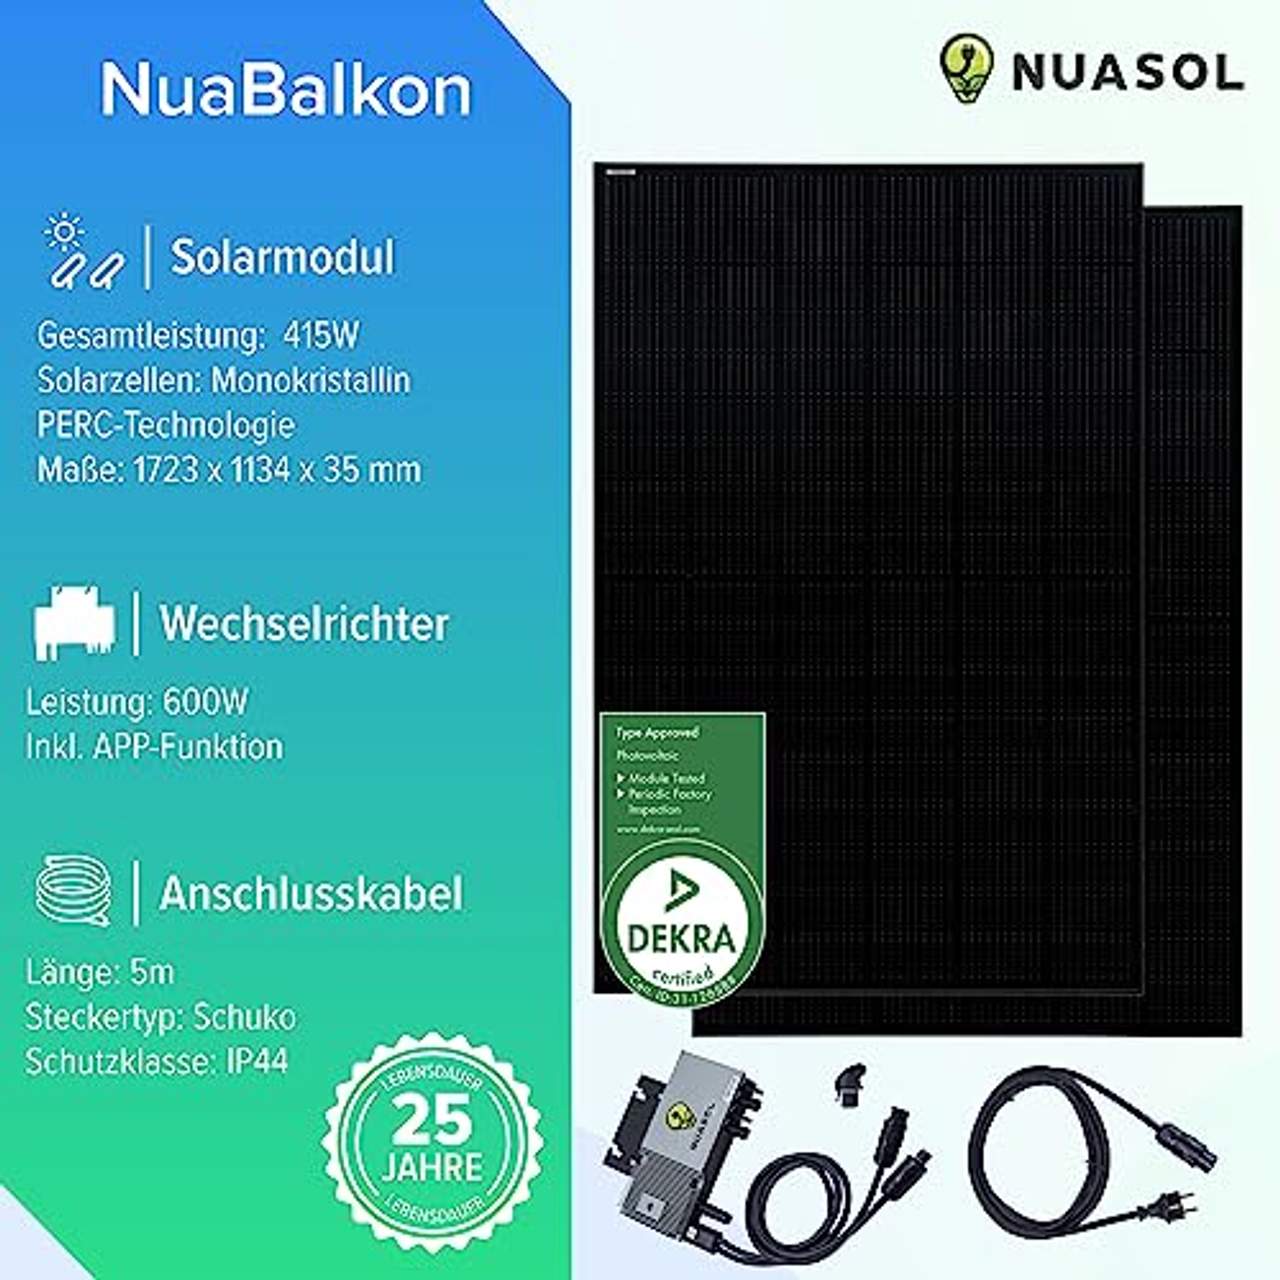 NuaSol Balkonkraftwerk 830W Solarmodul